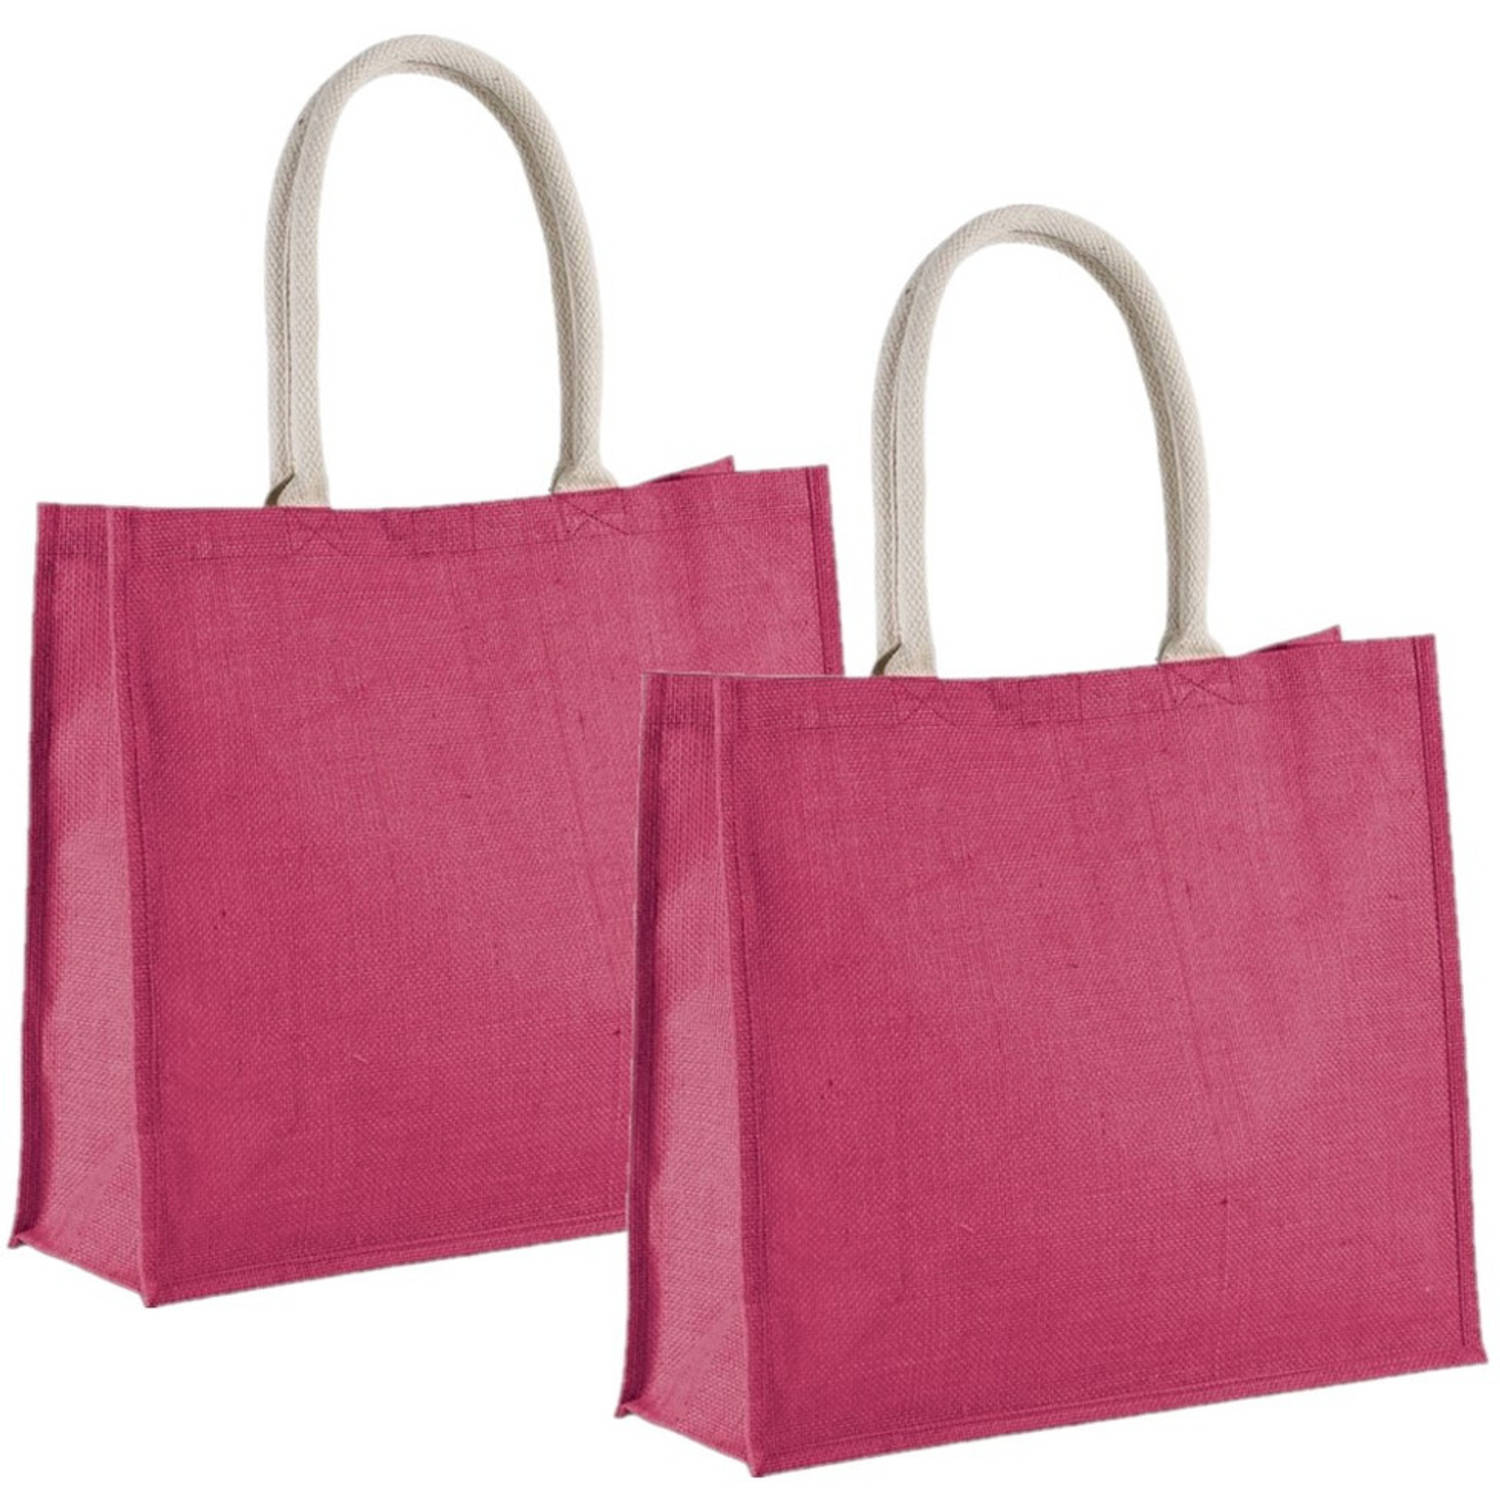 2x stuks fuchsia roze jute boodschappentassen 42 cm - Strandtassen